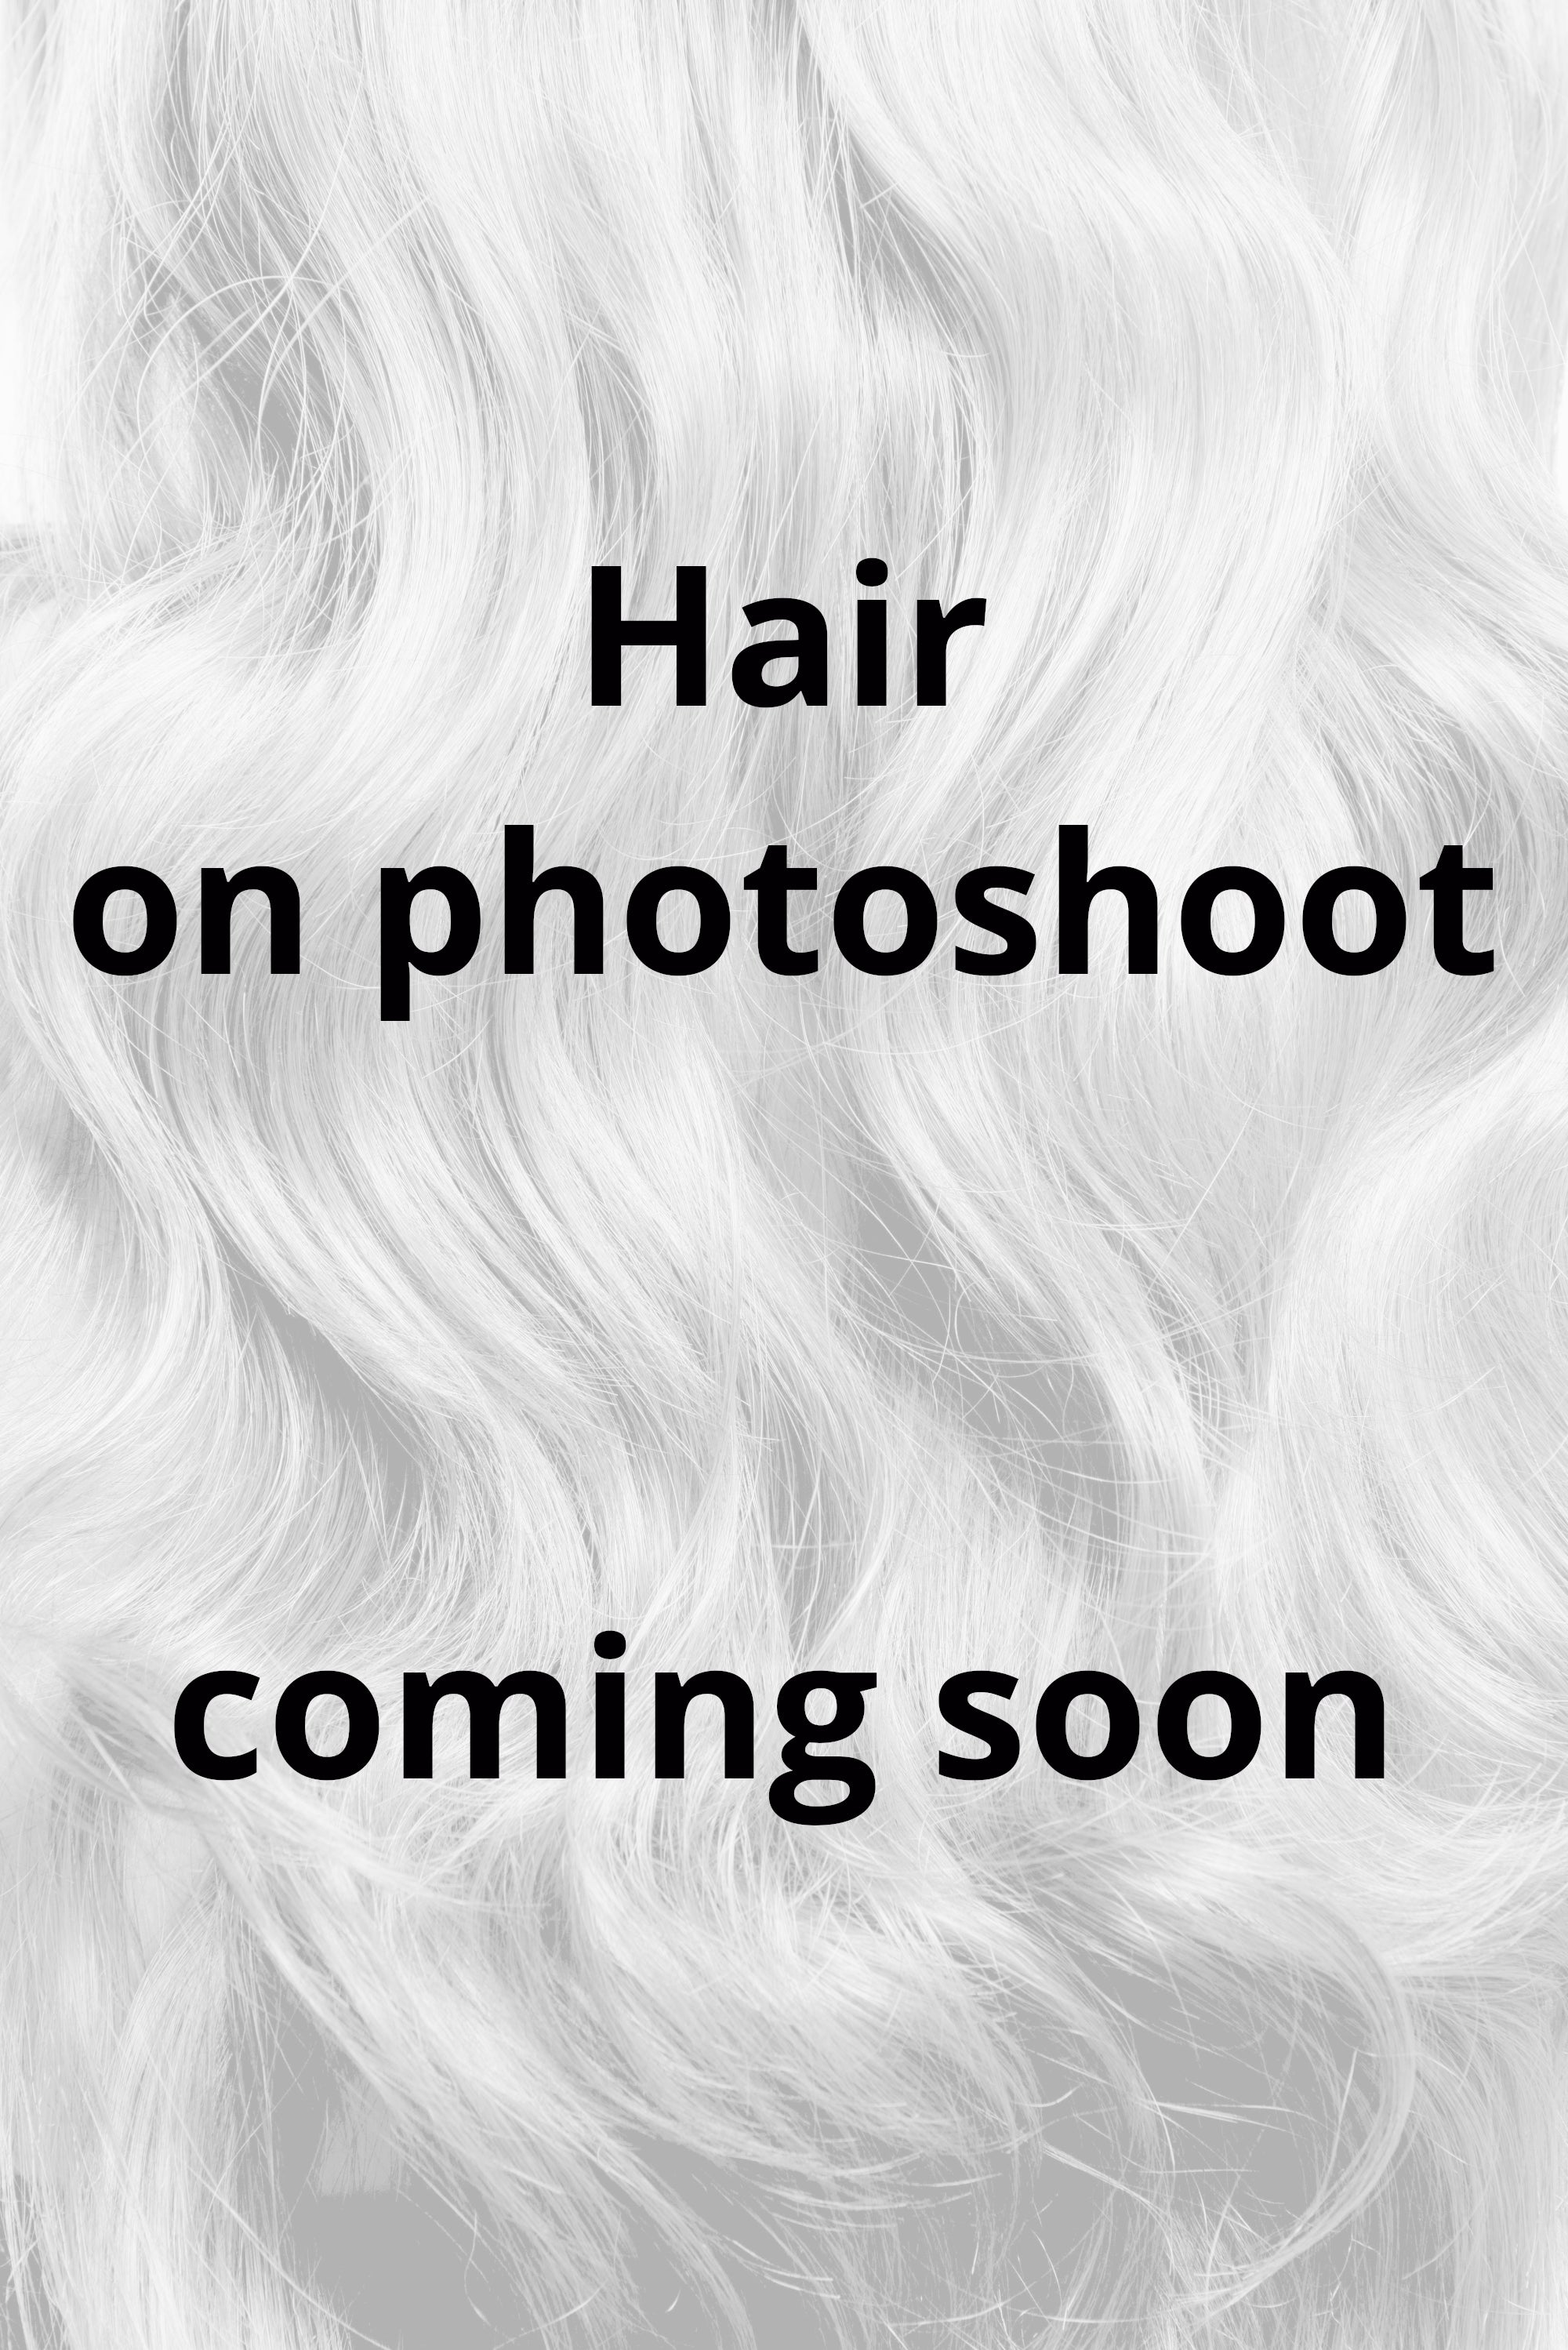 Behair professional Bulk hair "Premium" 20" (50cm) Natural Straight Light Almond #14 - 25g hair extensions